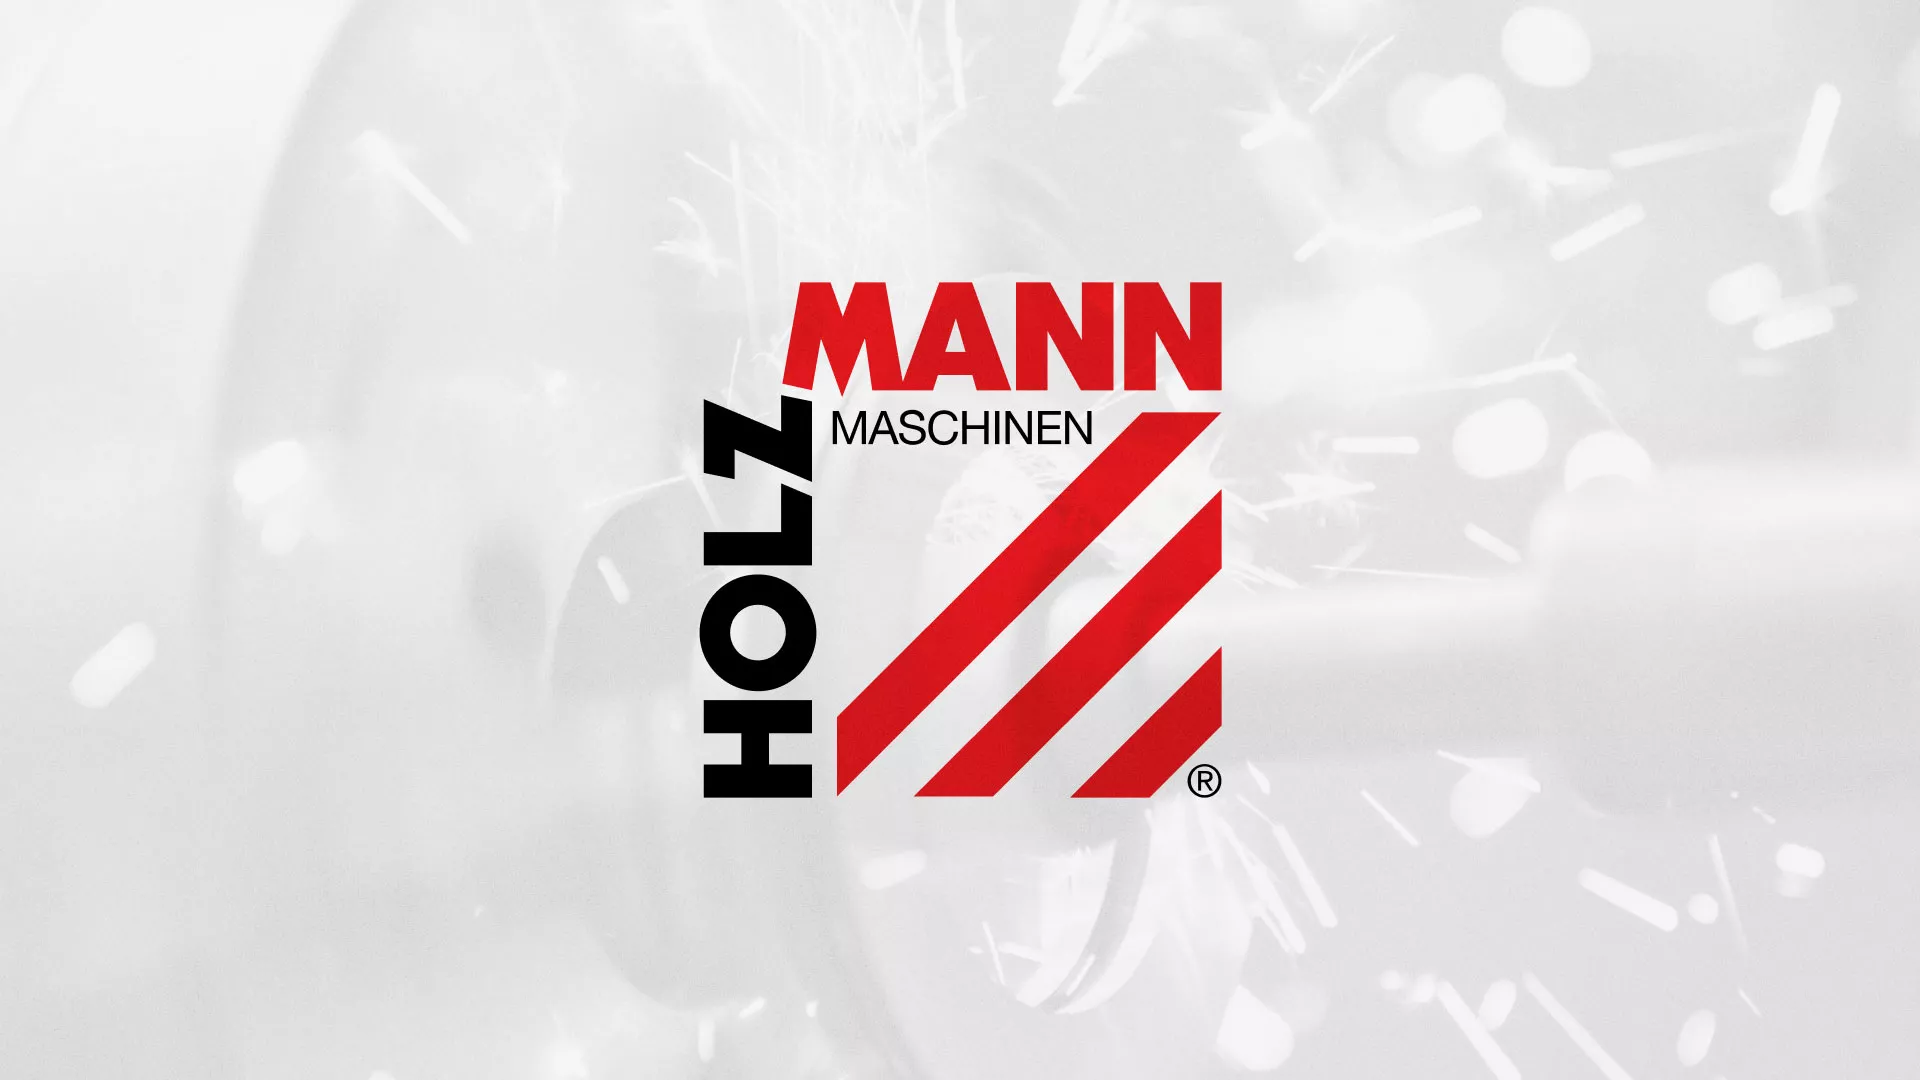 Создание сайта компании «HOLZMANN Maschinen GmbH» в Симферополе